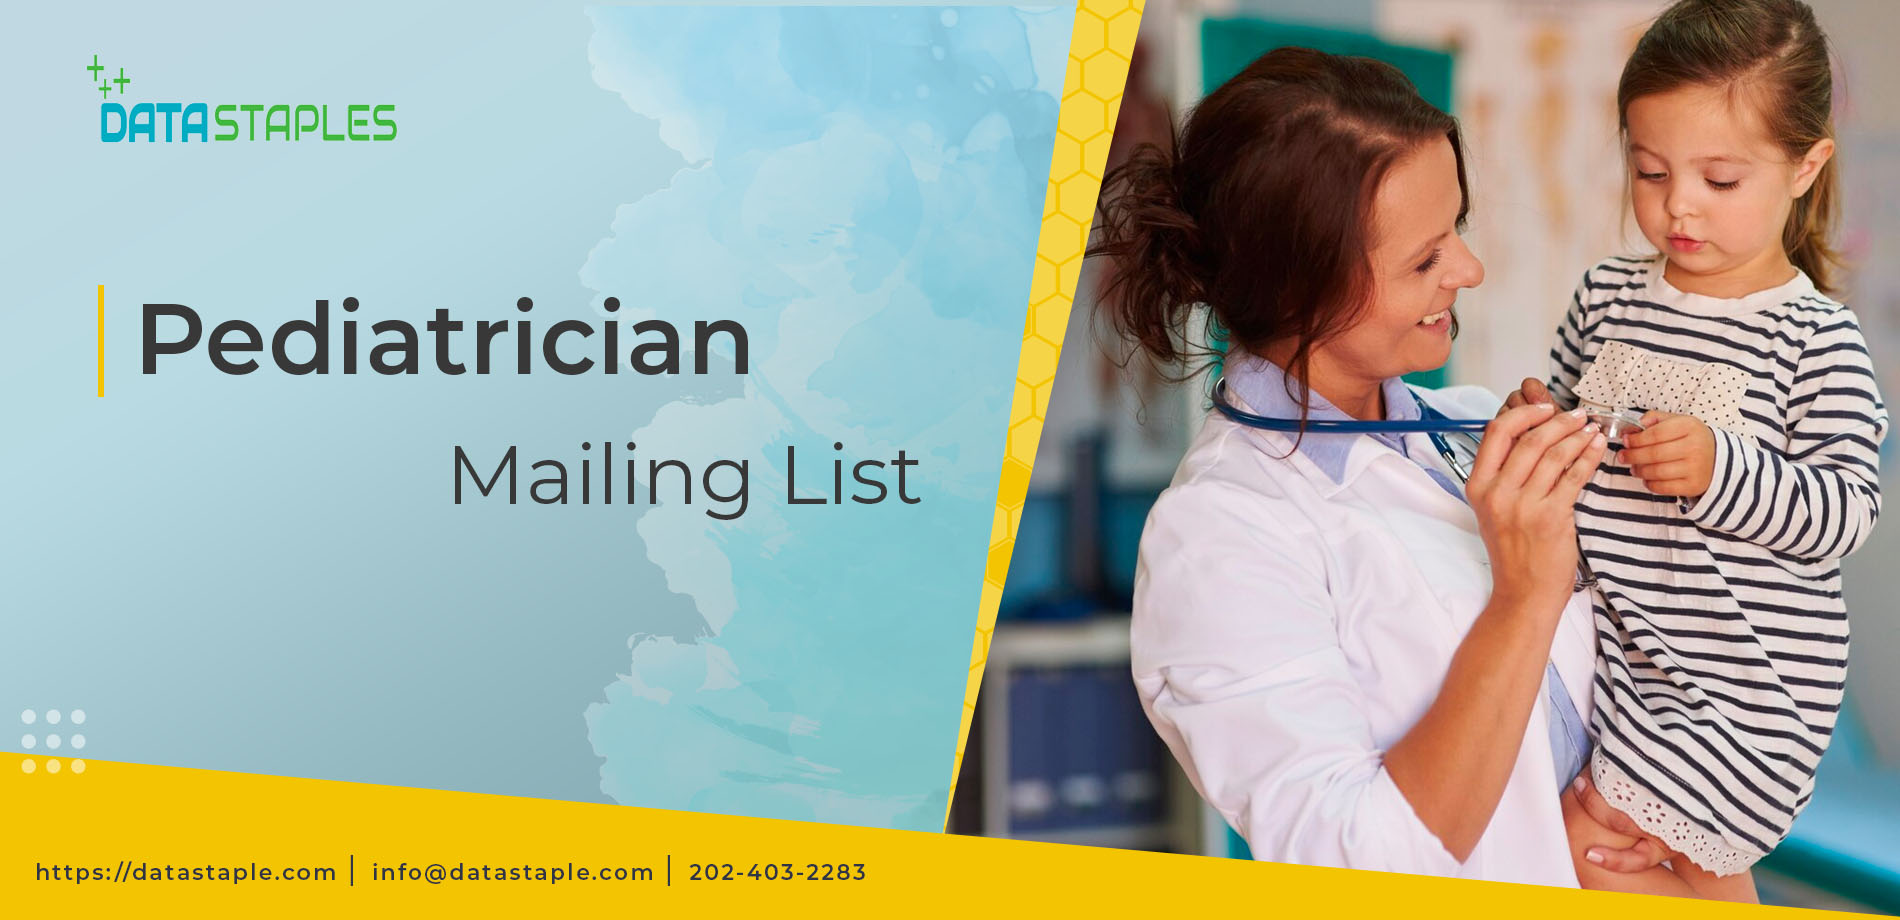 Pediatrician Mailing List | DataStaples